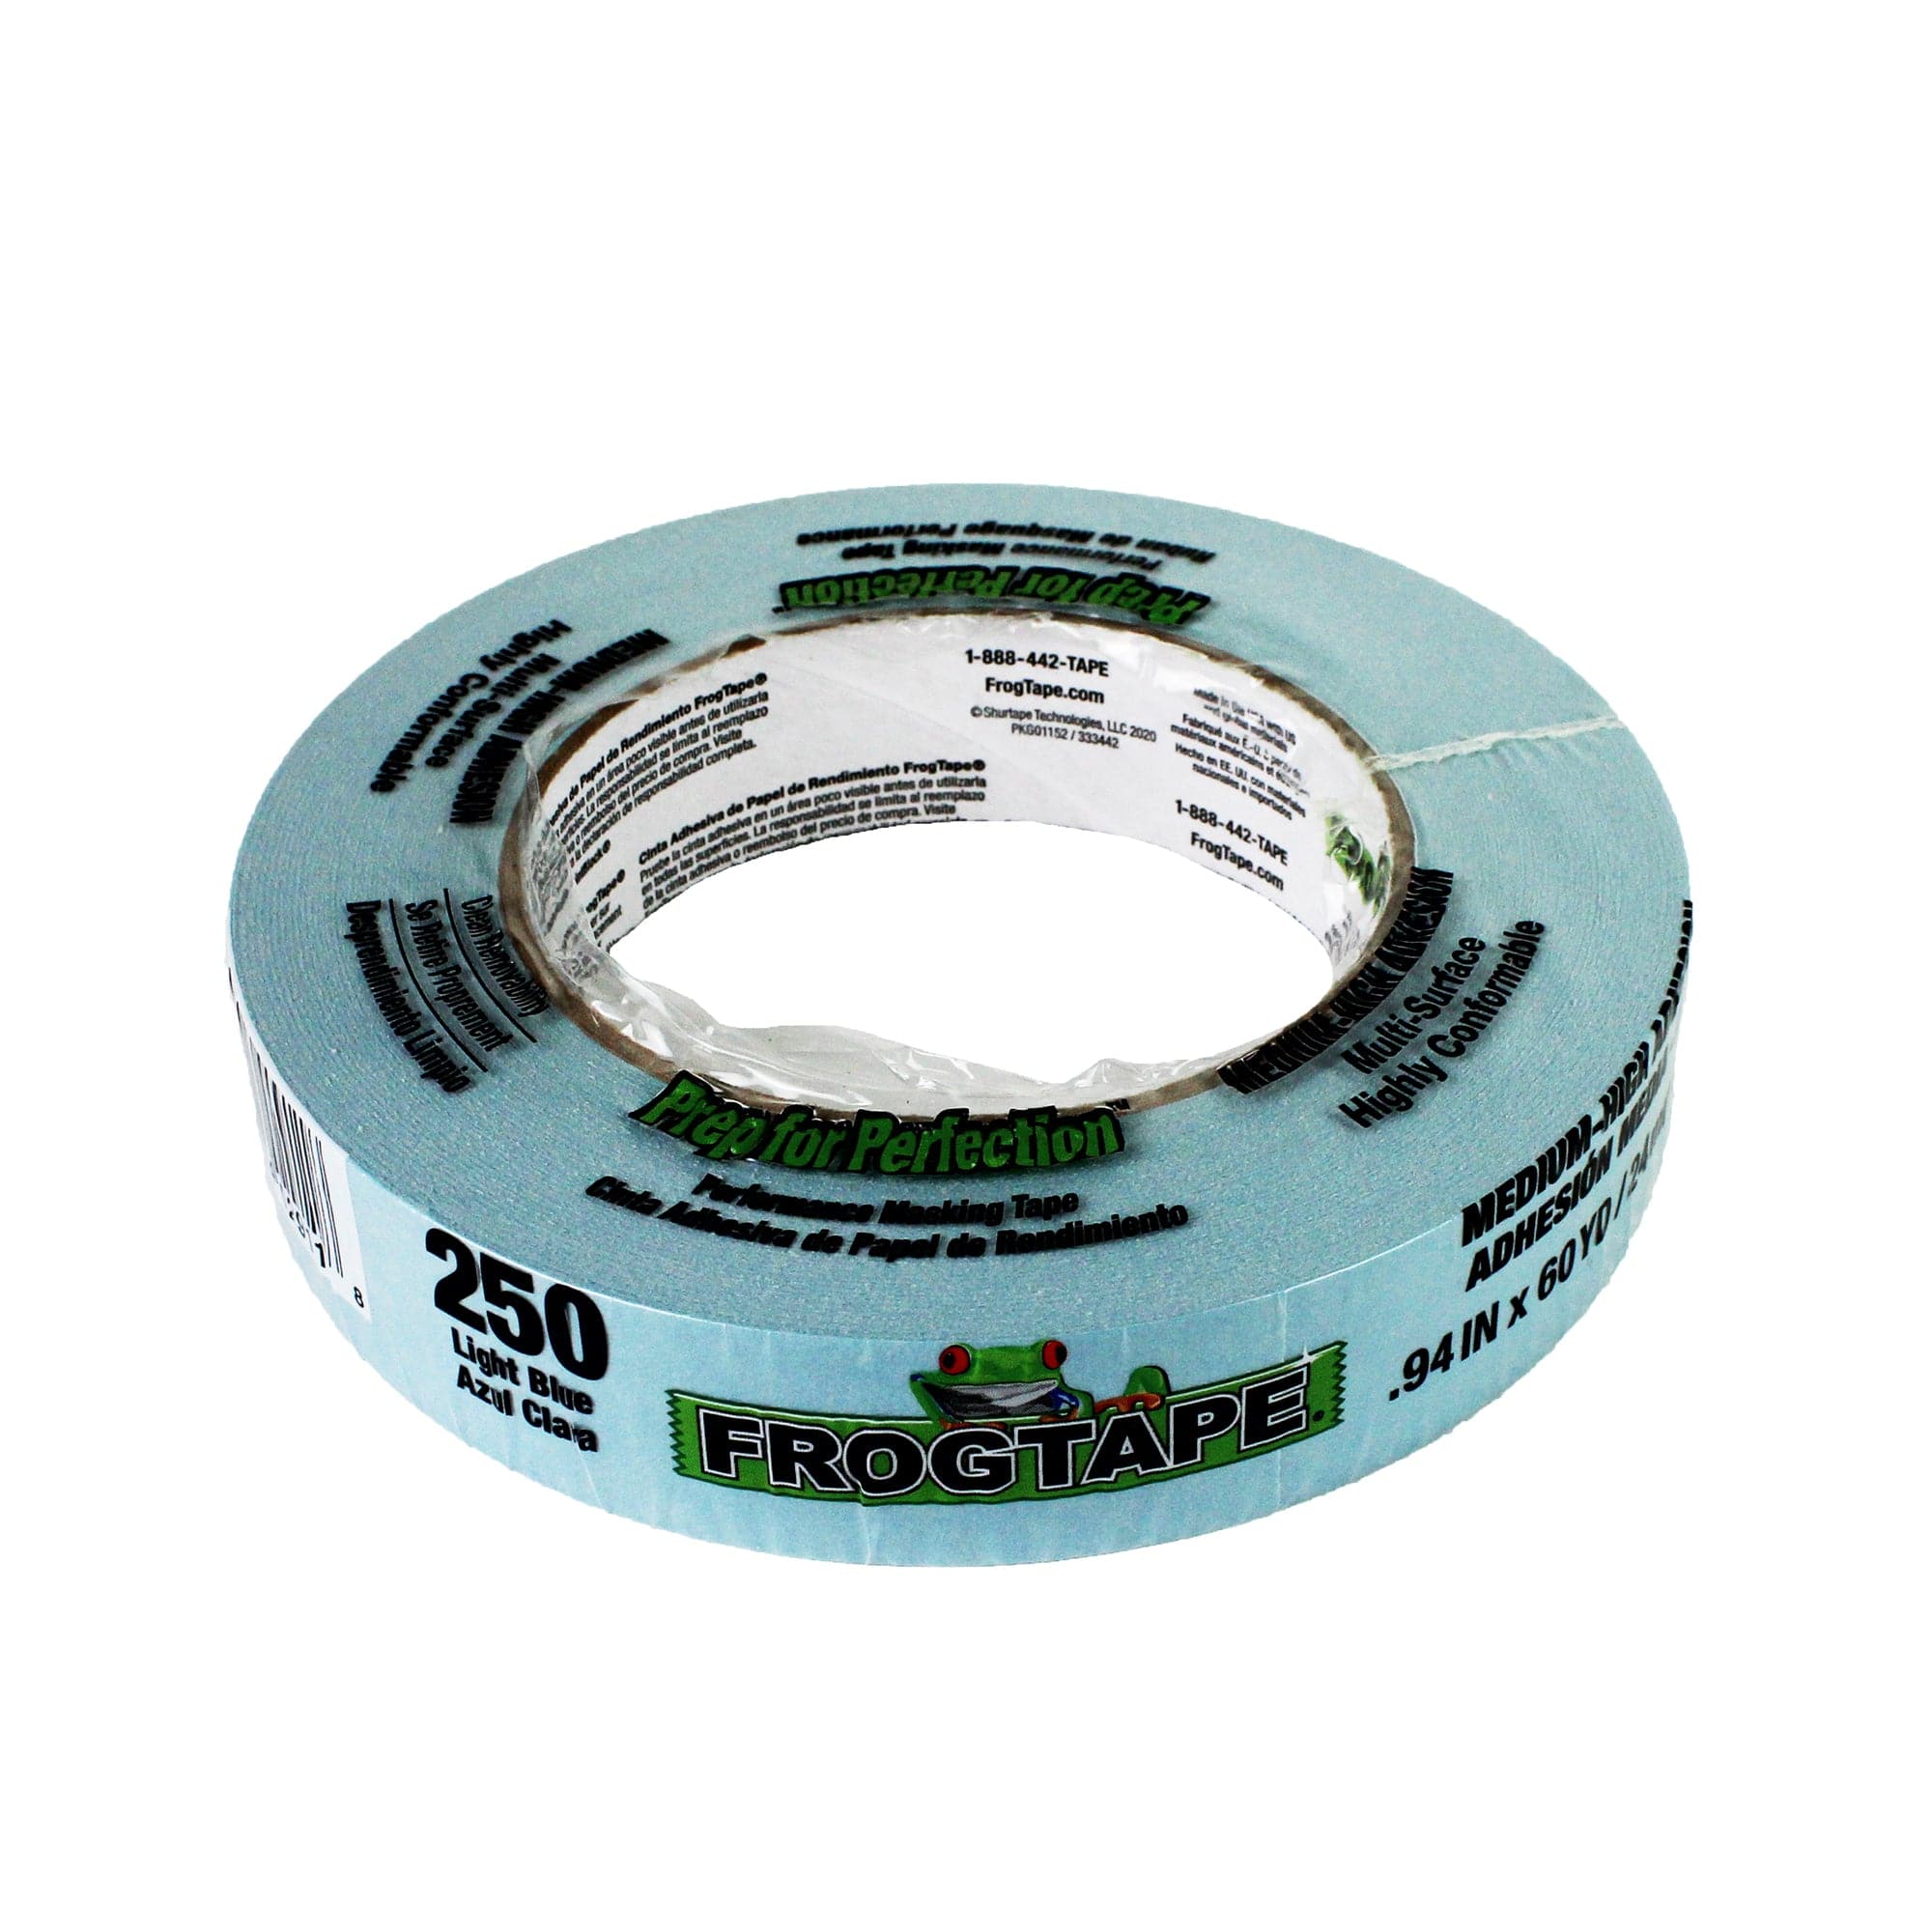 Shurtape 105378 FrogTape CP 250 24mmx55m Performance Grade Masking Tape, Medium-High Adhesion, Moderate Temperature - Light Blue